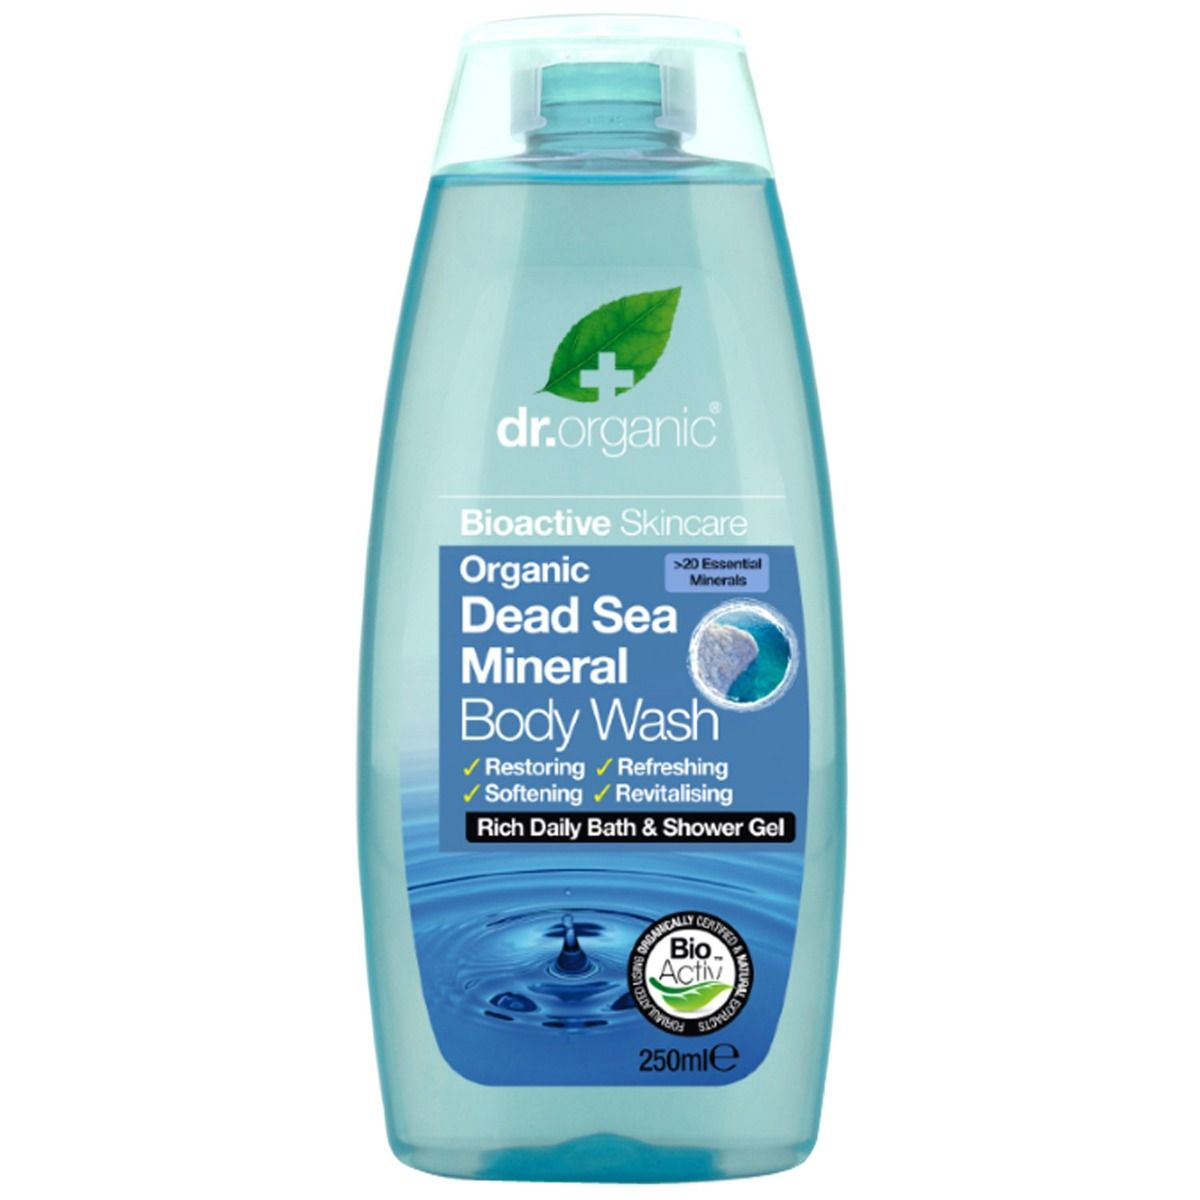 Buy dr.organic Dead Sea Mineral Body Wash, 250 ml Online